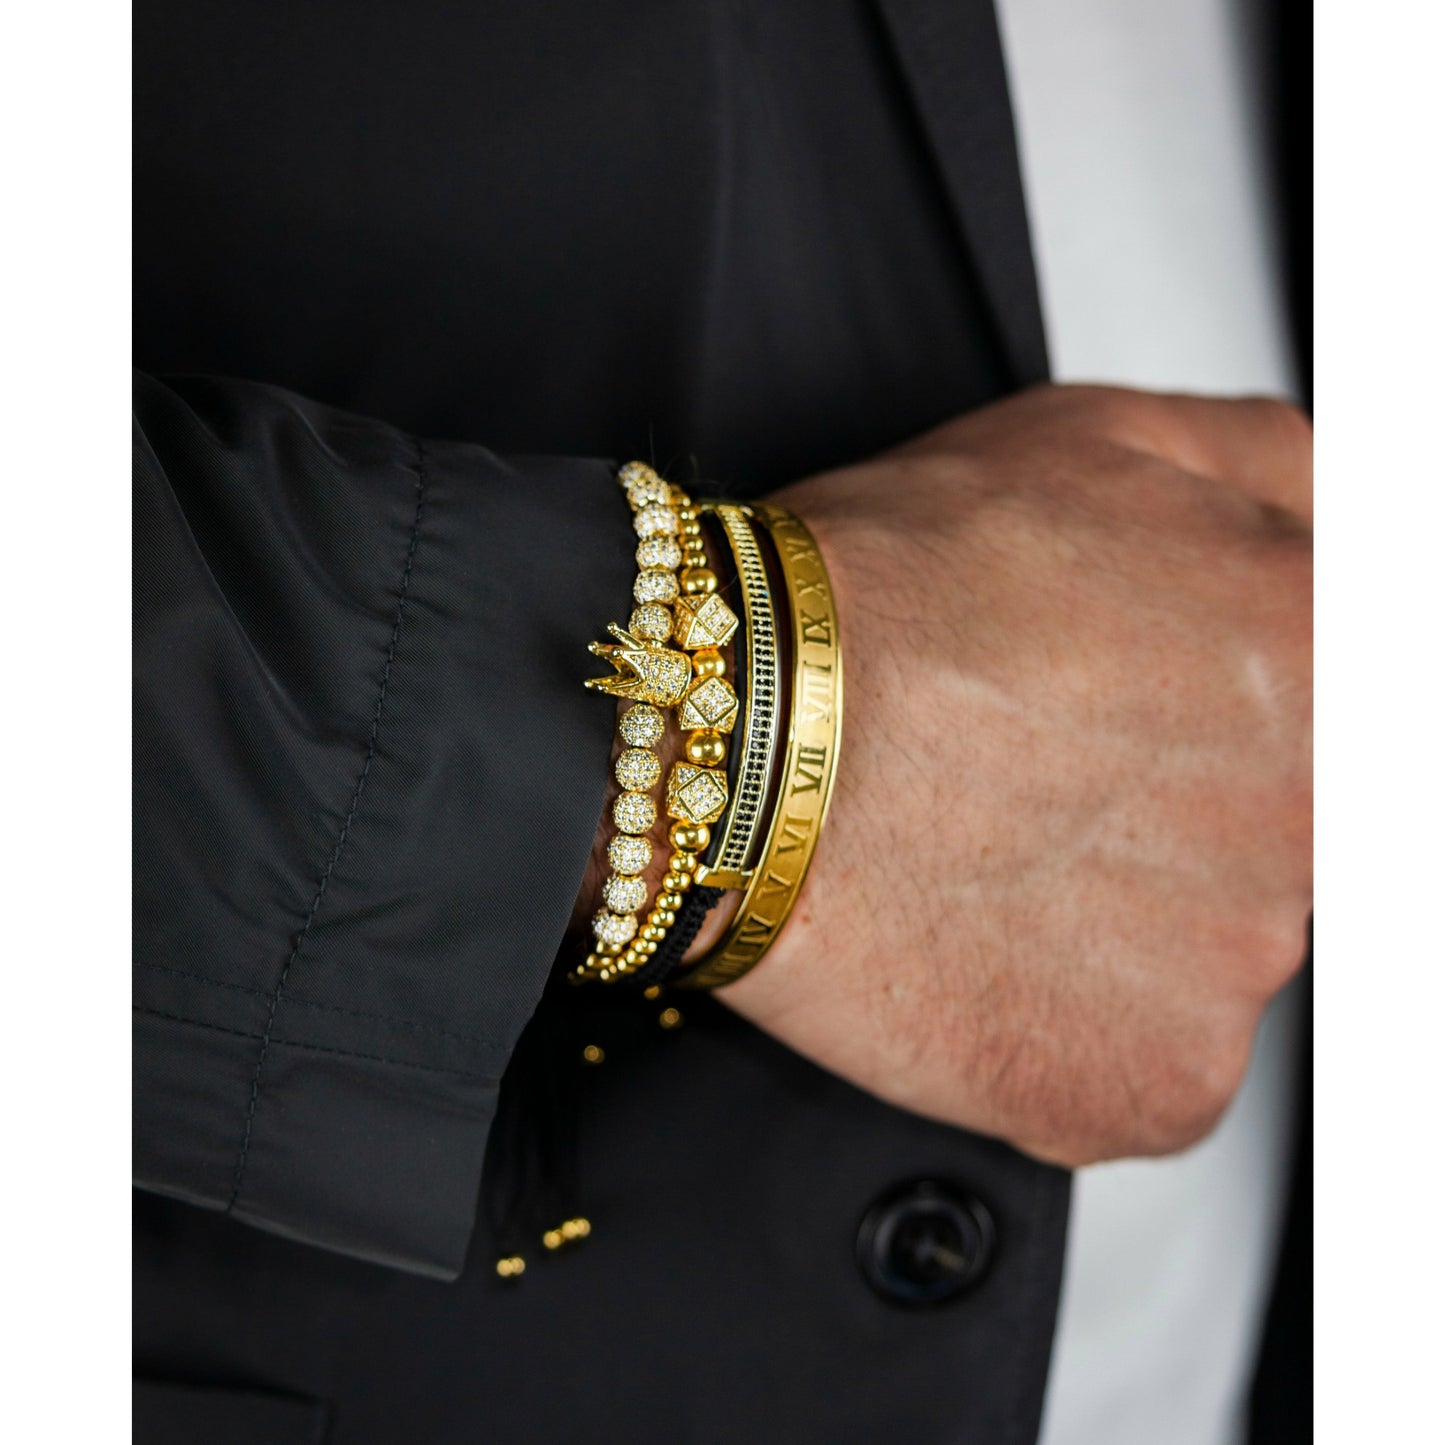 Imperial Roman King Set in Gold on man's wrist wearing black blazer